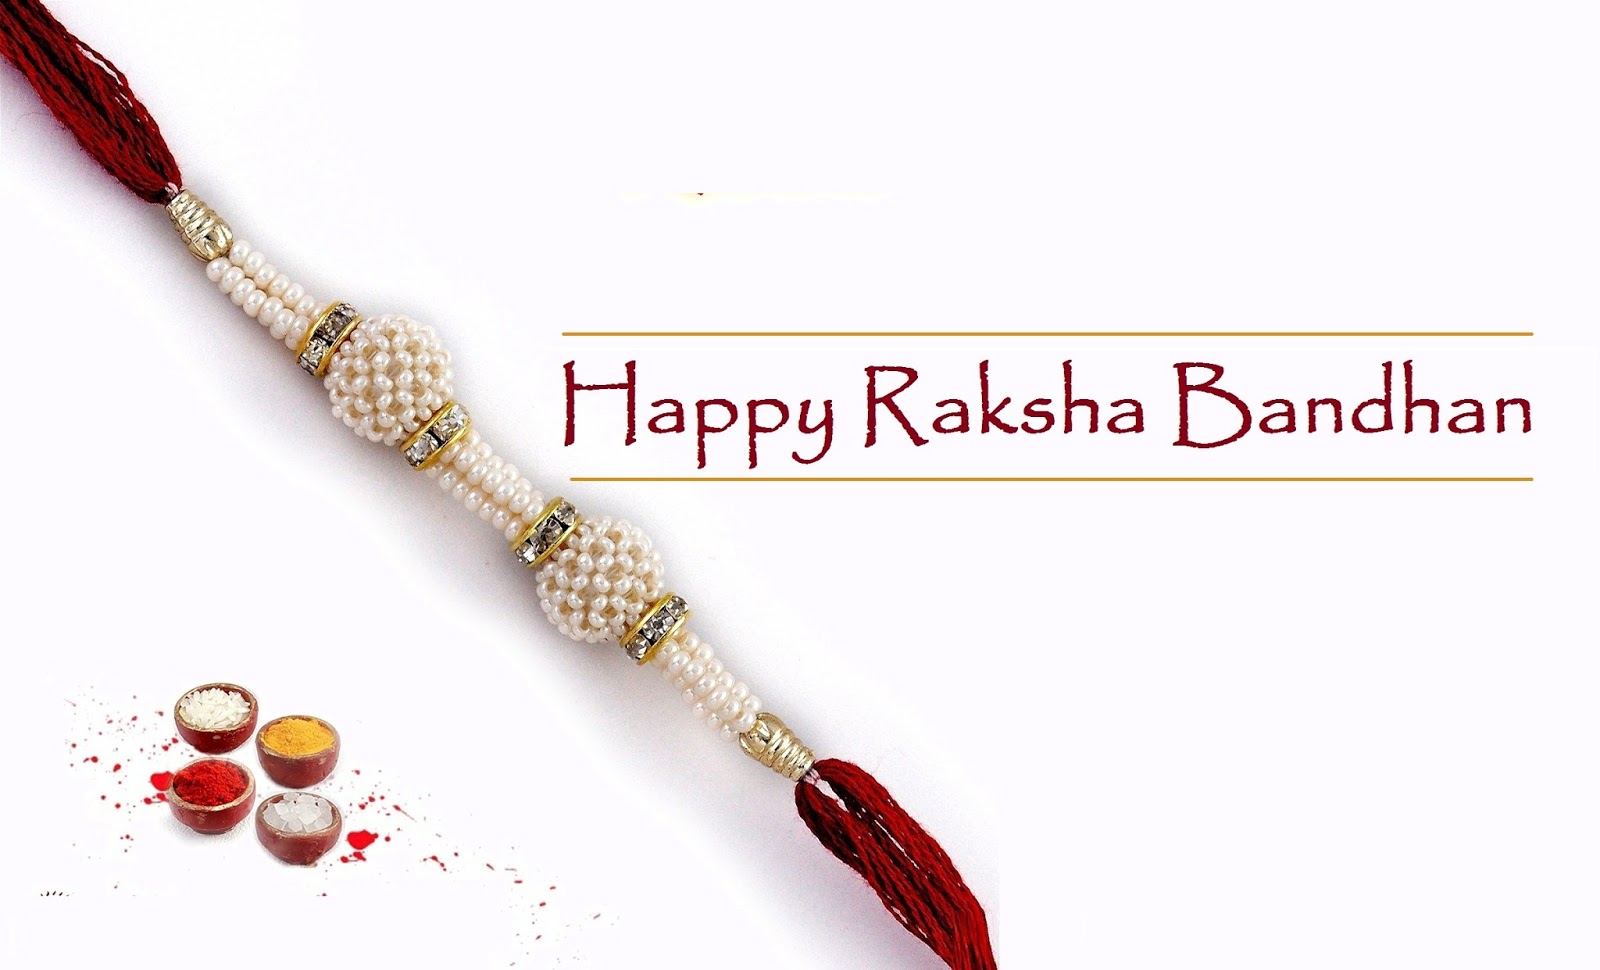 Happy Rakshan Bandhan Thread Of Love Between Brother And Sister Rakhi Picture